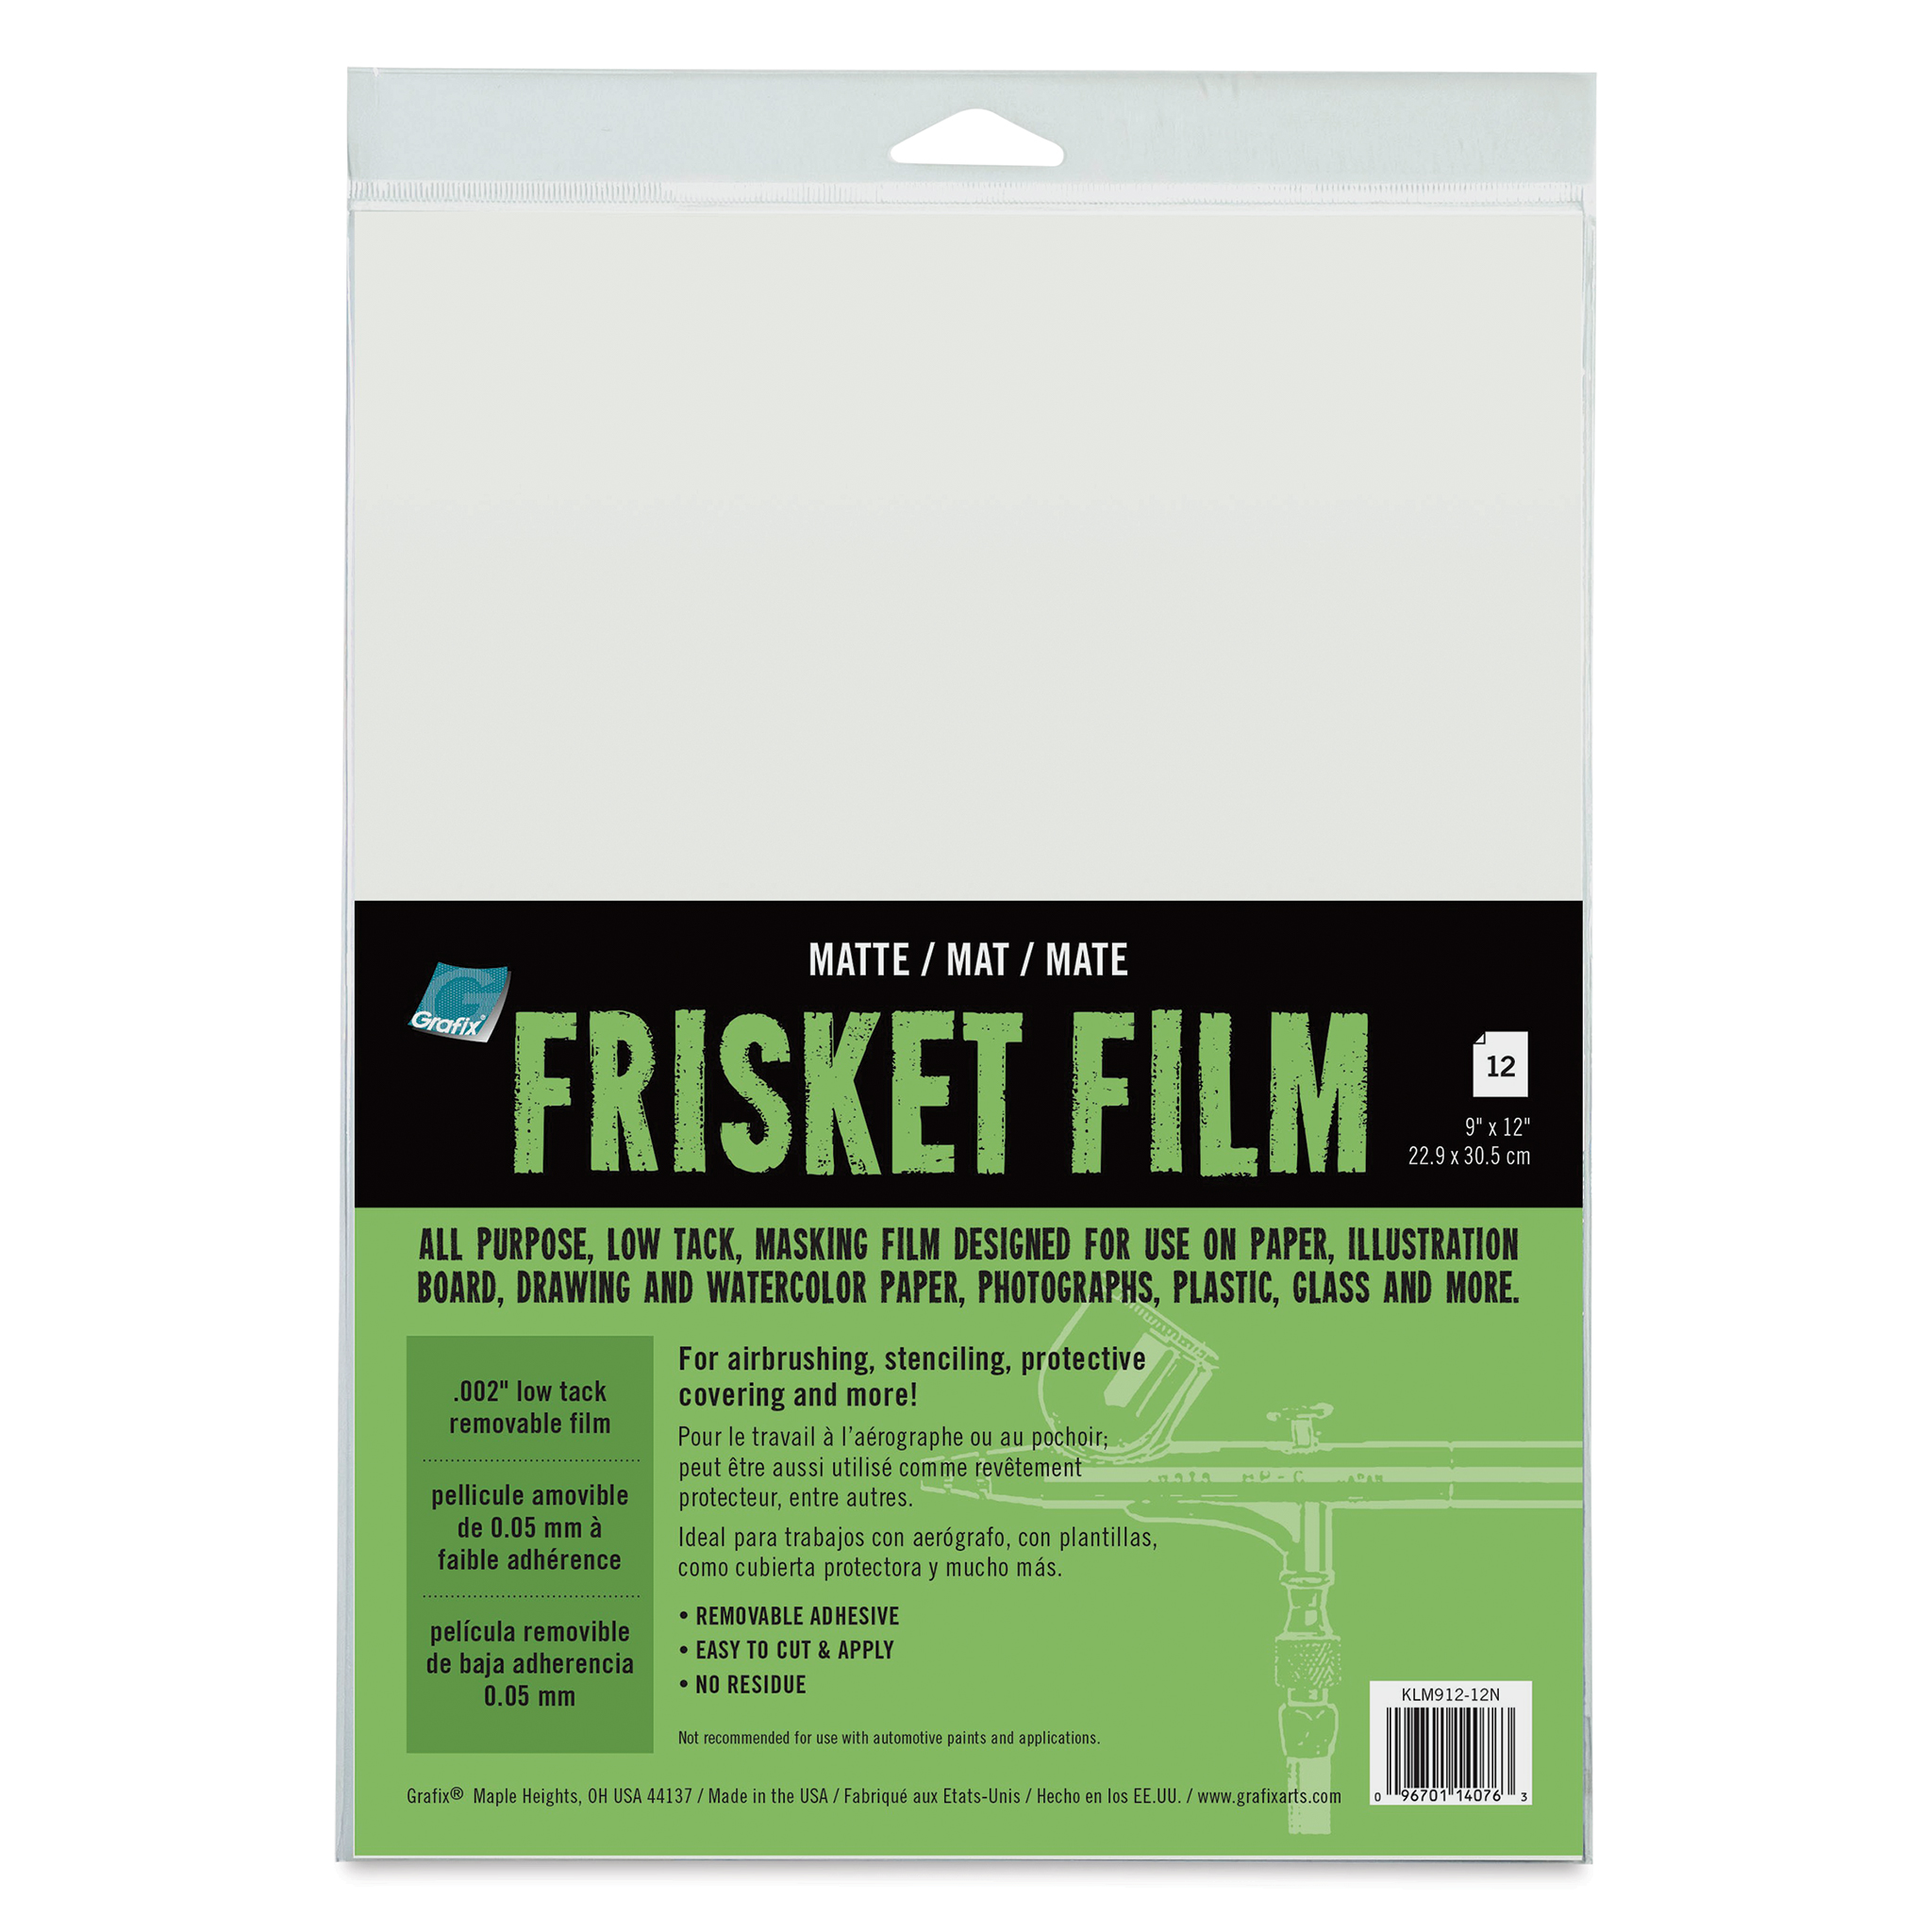 Grafix Edge Frisket Film Rolls - The Paint Spot - Art Supplies and